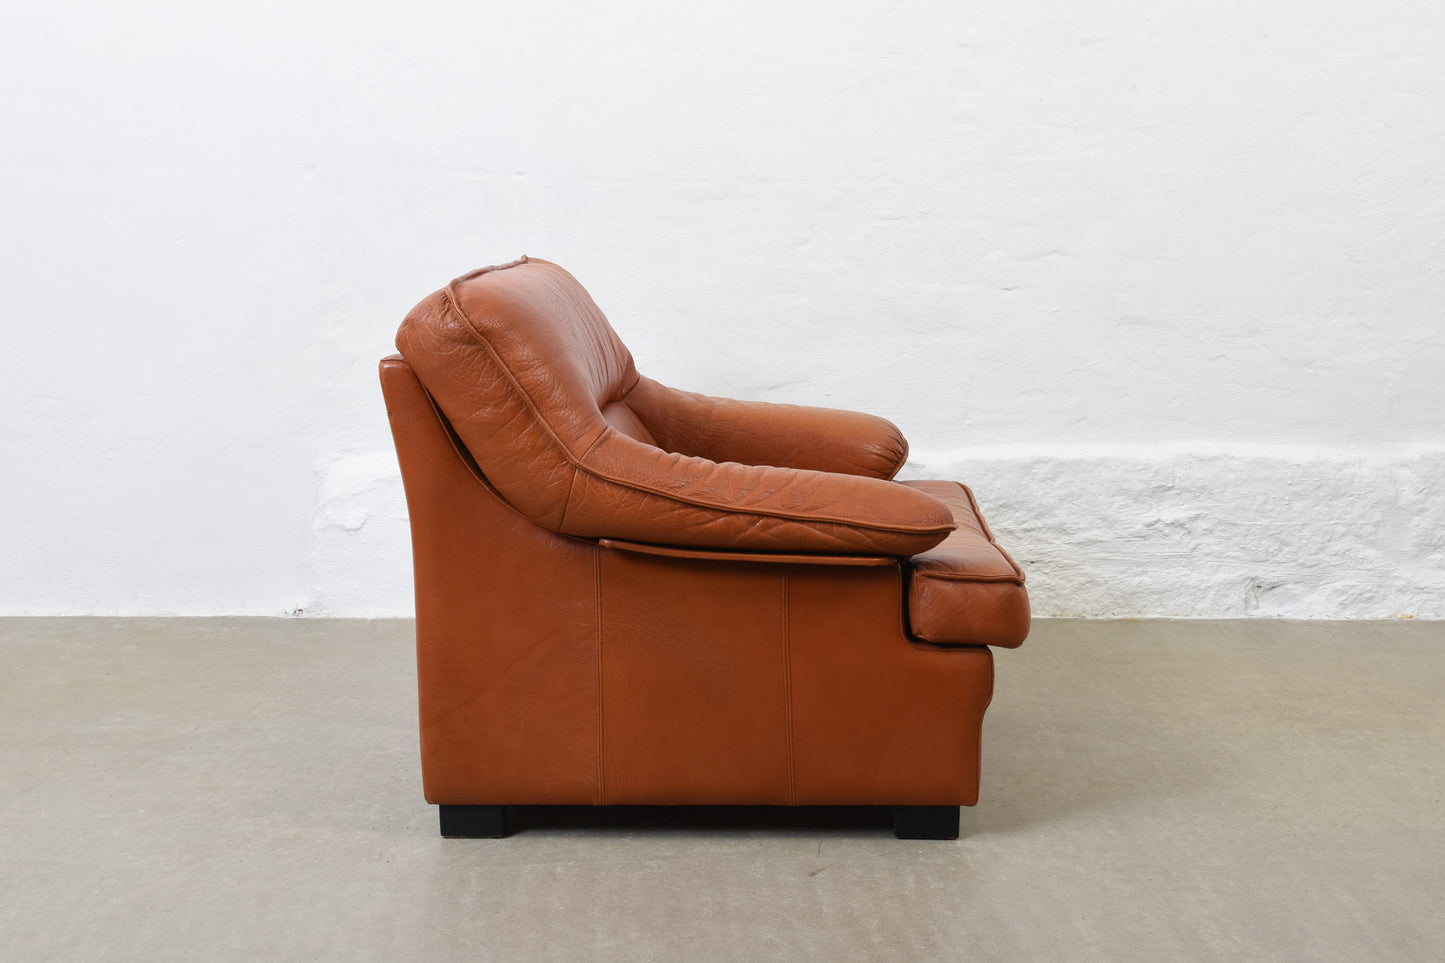 1980s Danish leather lounger by Mogens Hansen